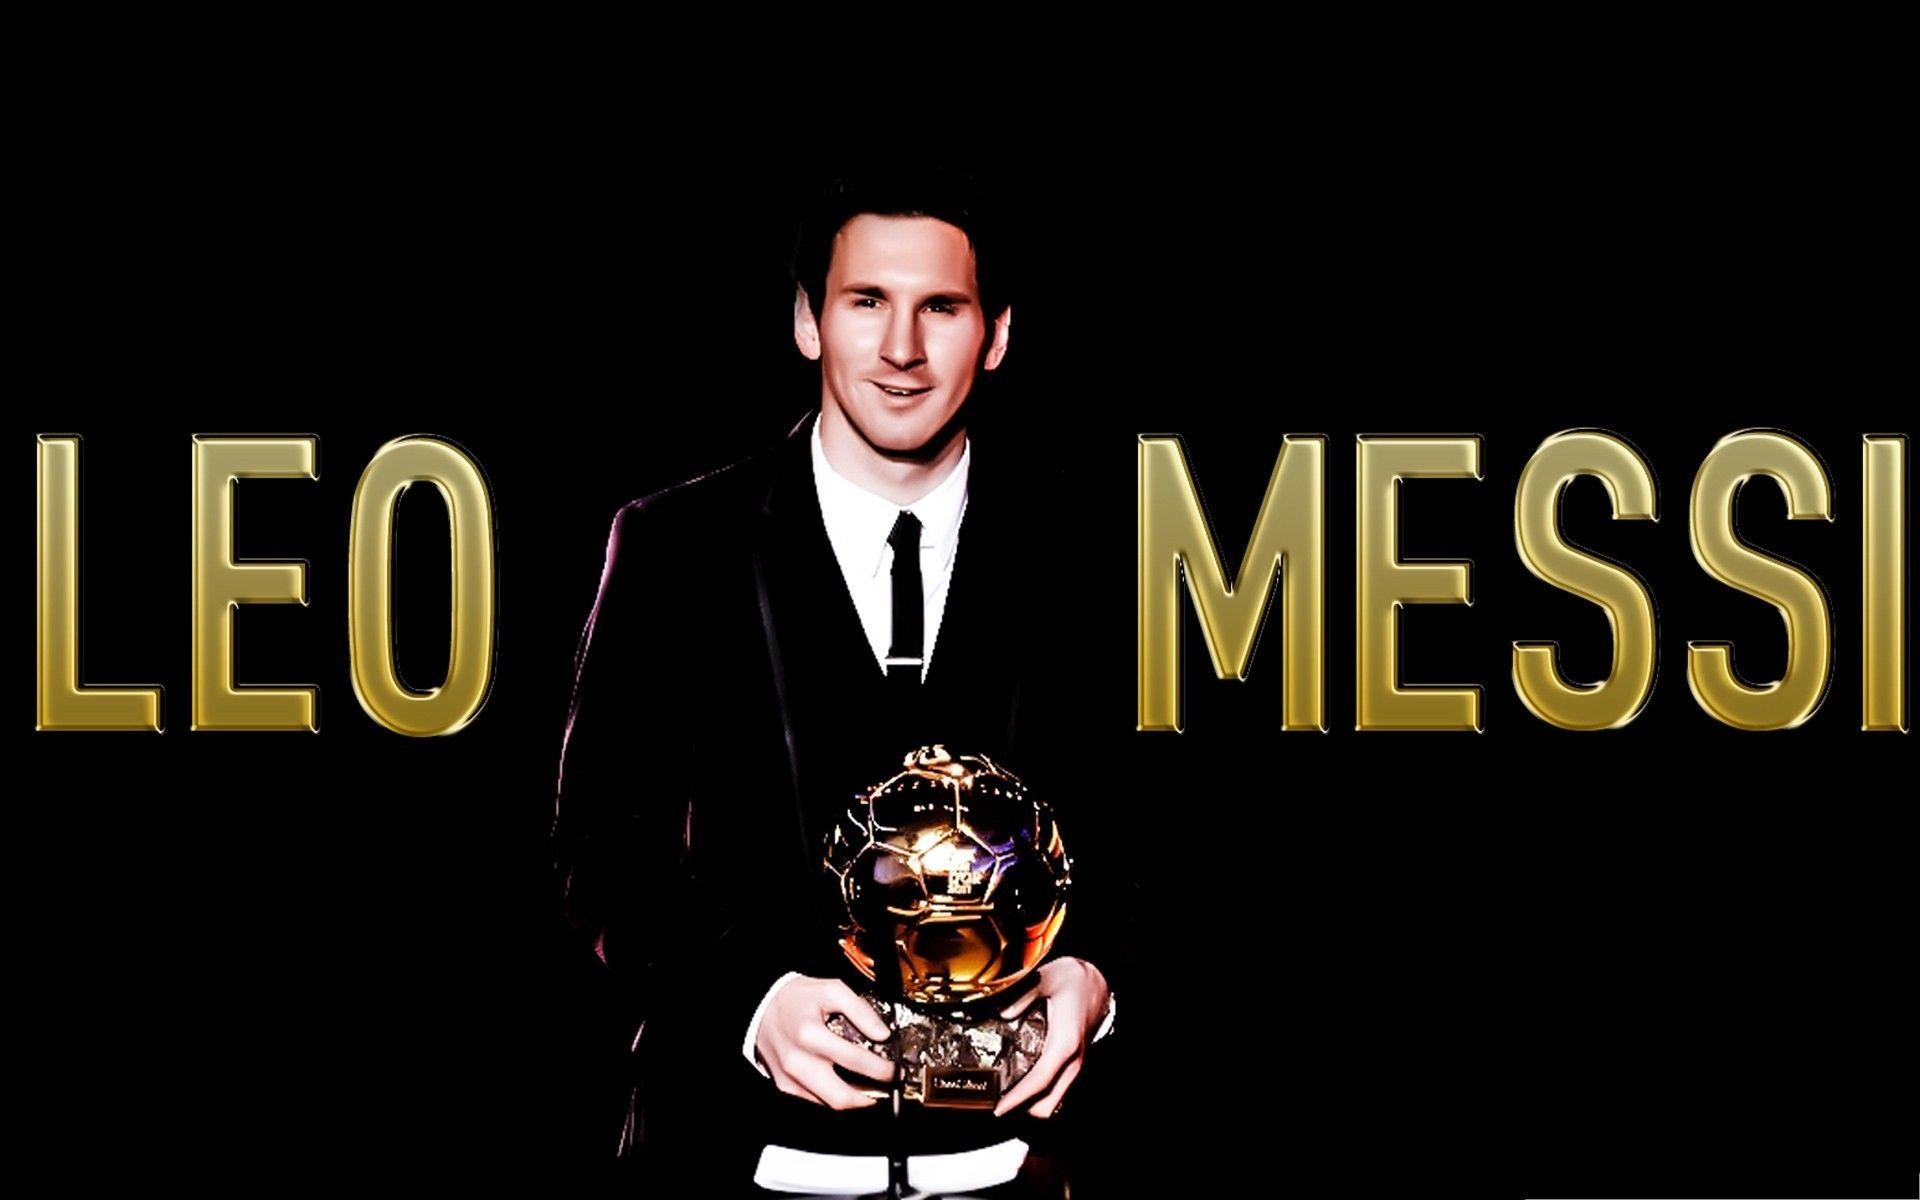 Lionel Messi HD Wallpaper Free Download. HD Free Wallpaper Download